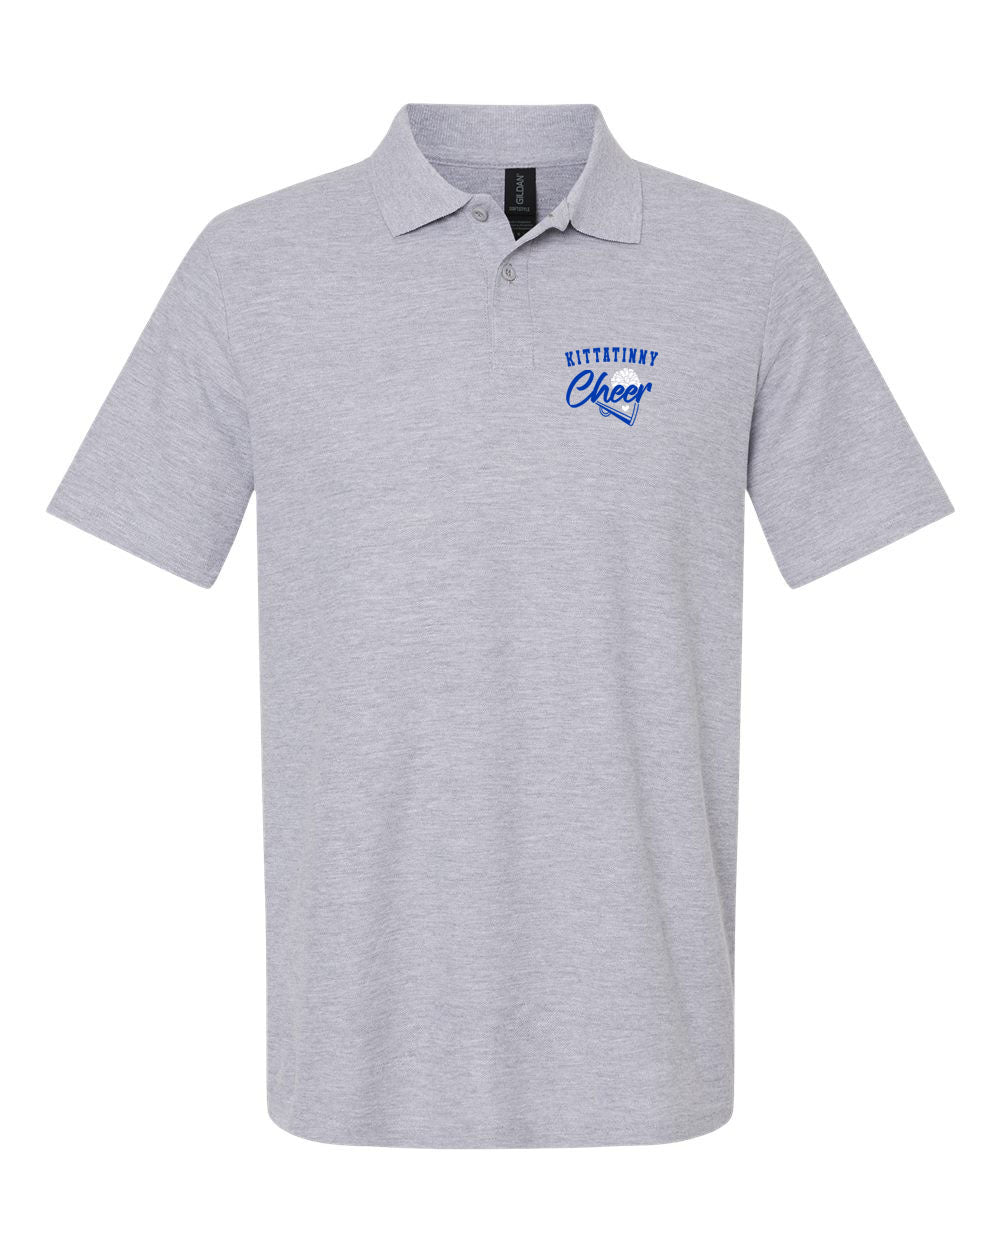 Kittatinny Cheer Polo T-Shirt Design 9